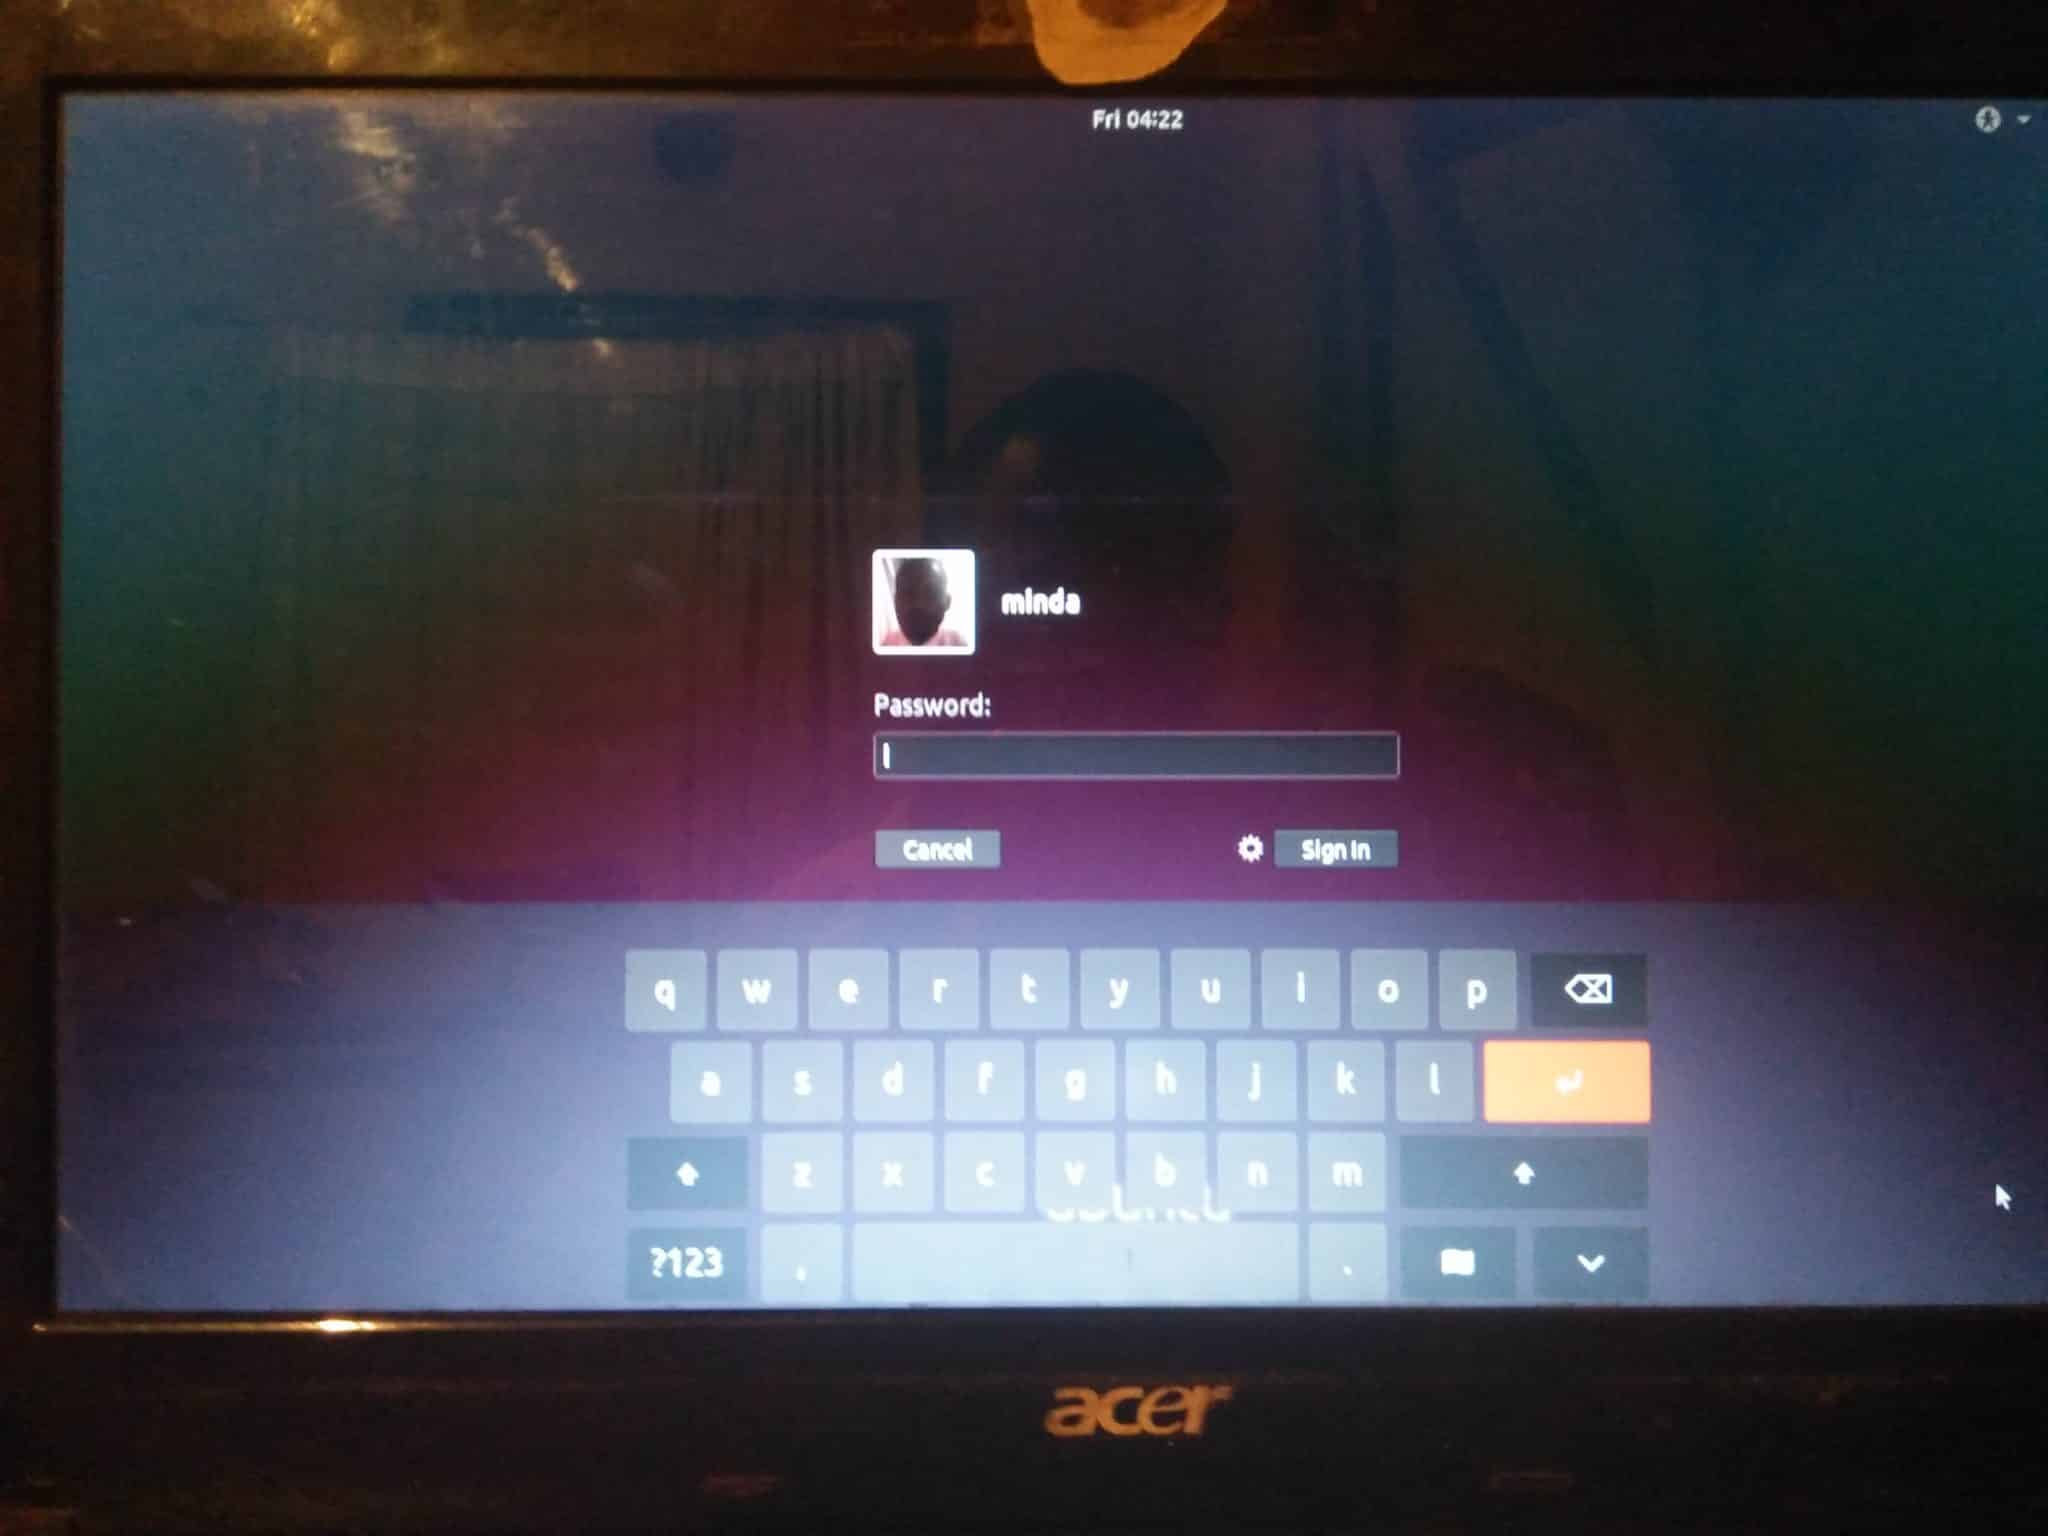 Ubuntu Login screen